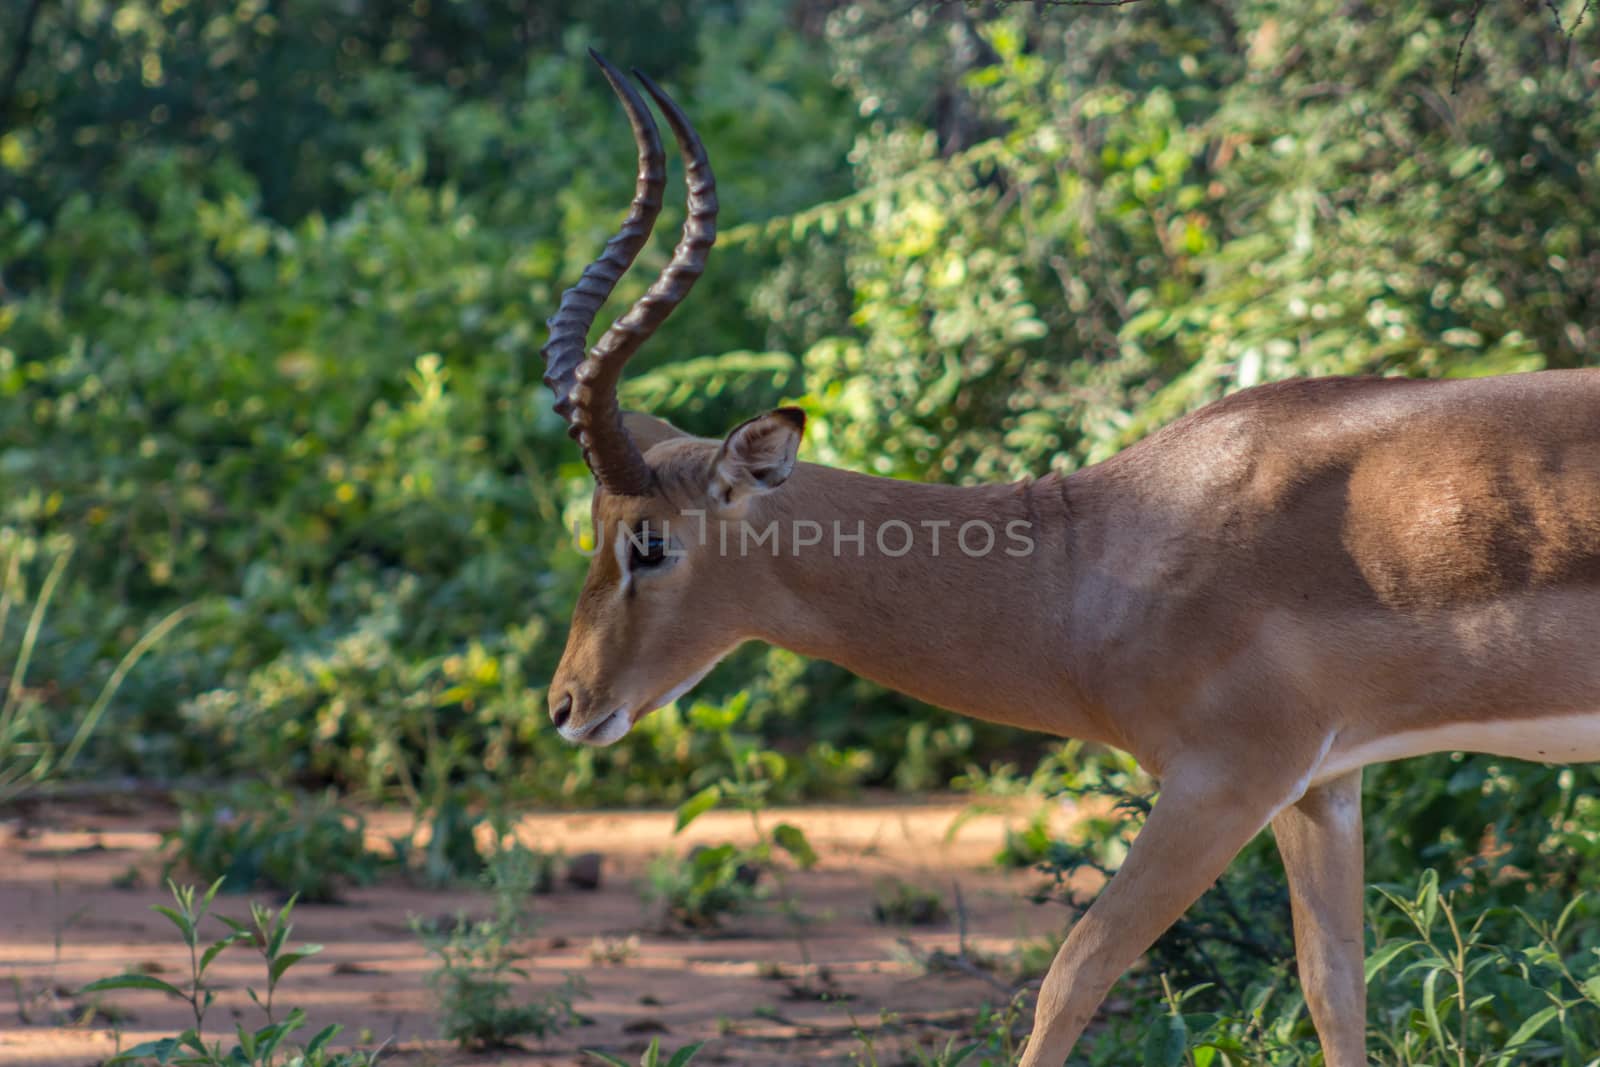 Impala (Aepyceros melampus) closeup photograph